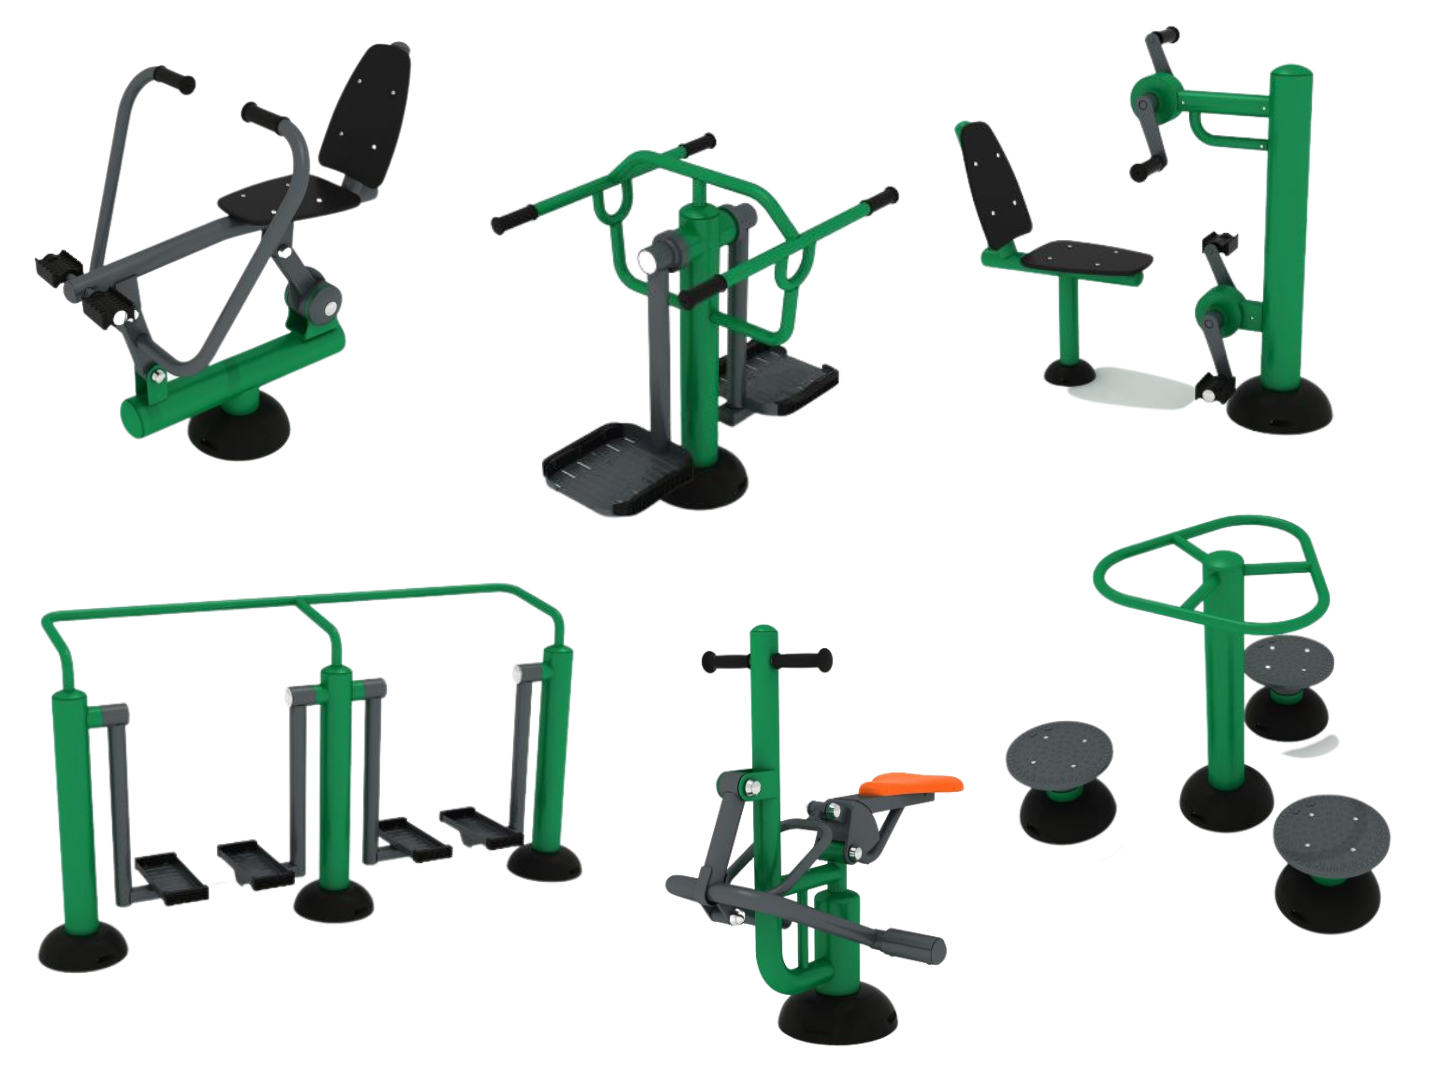 Cardio Gym Equipment Bundle How Much is playground Equipment